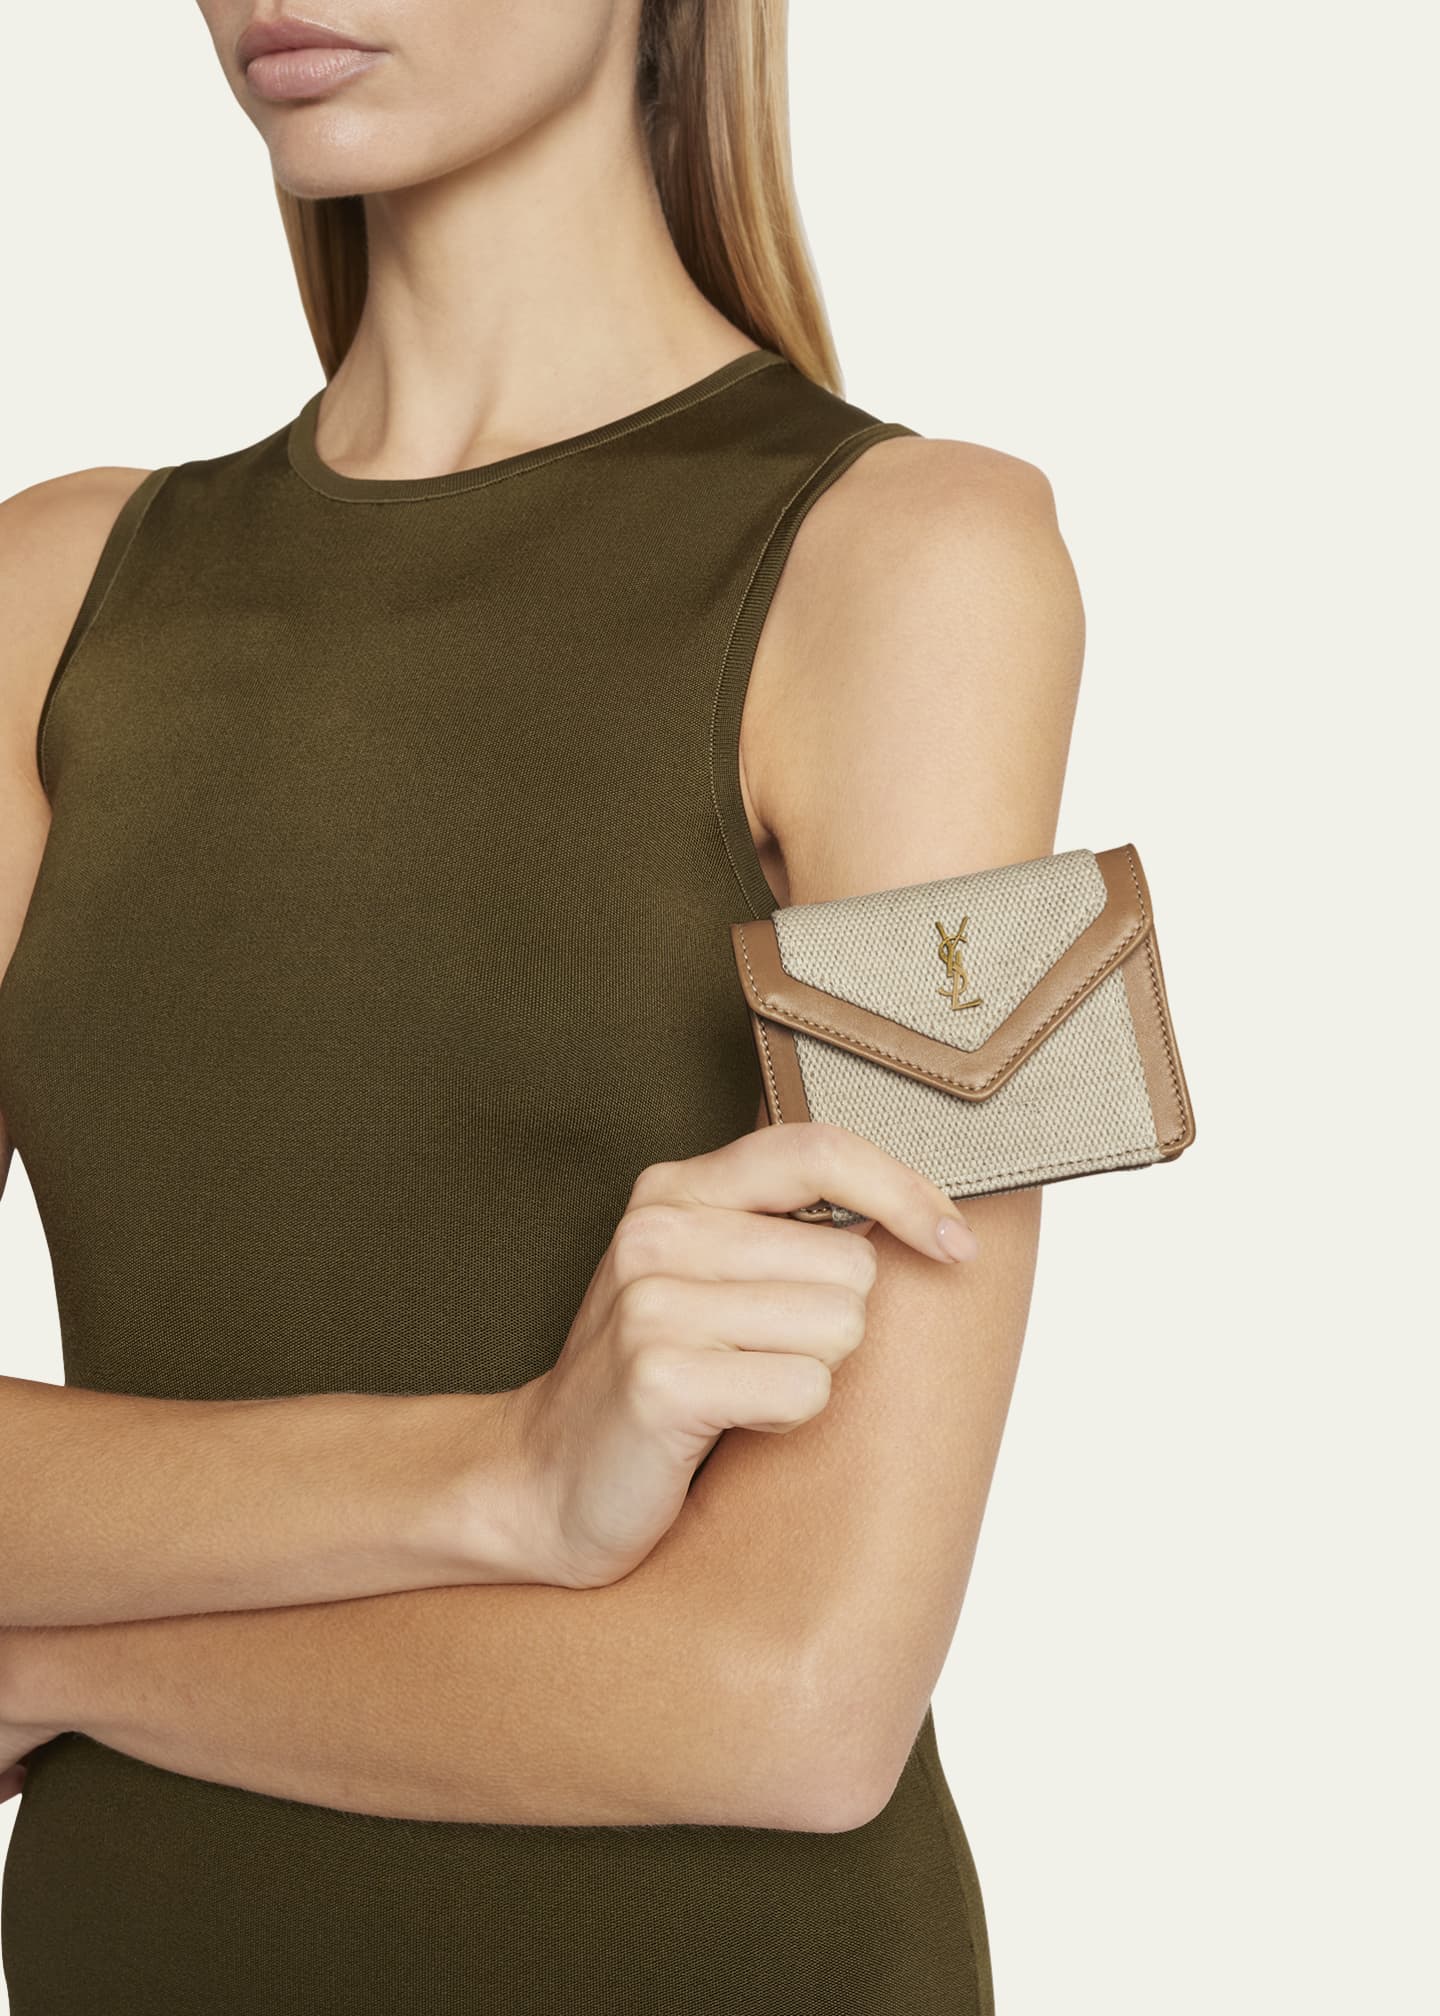 Saint Laurent Gaby Micro Vegan Leather And Canvas Crossbody Bag in Natural